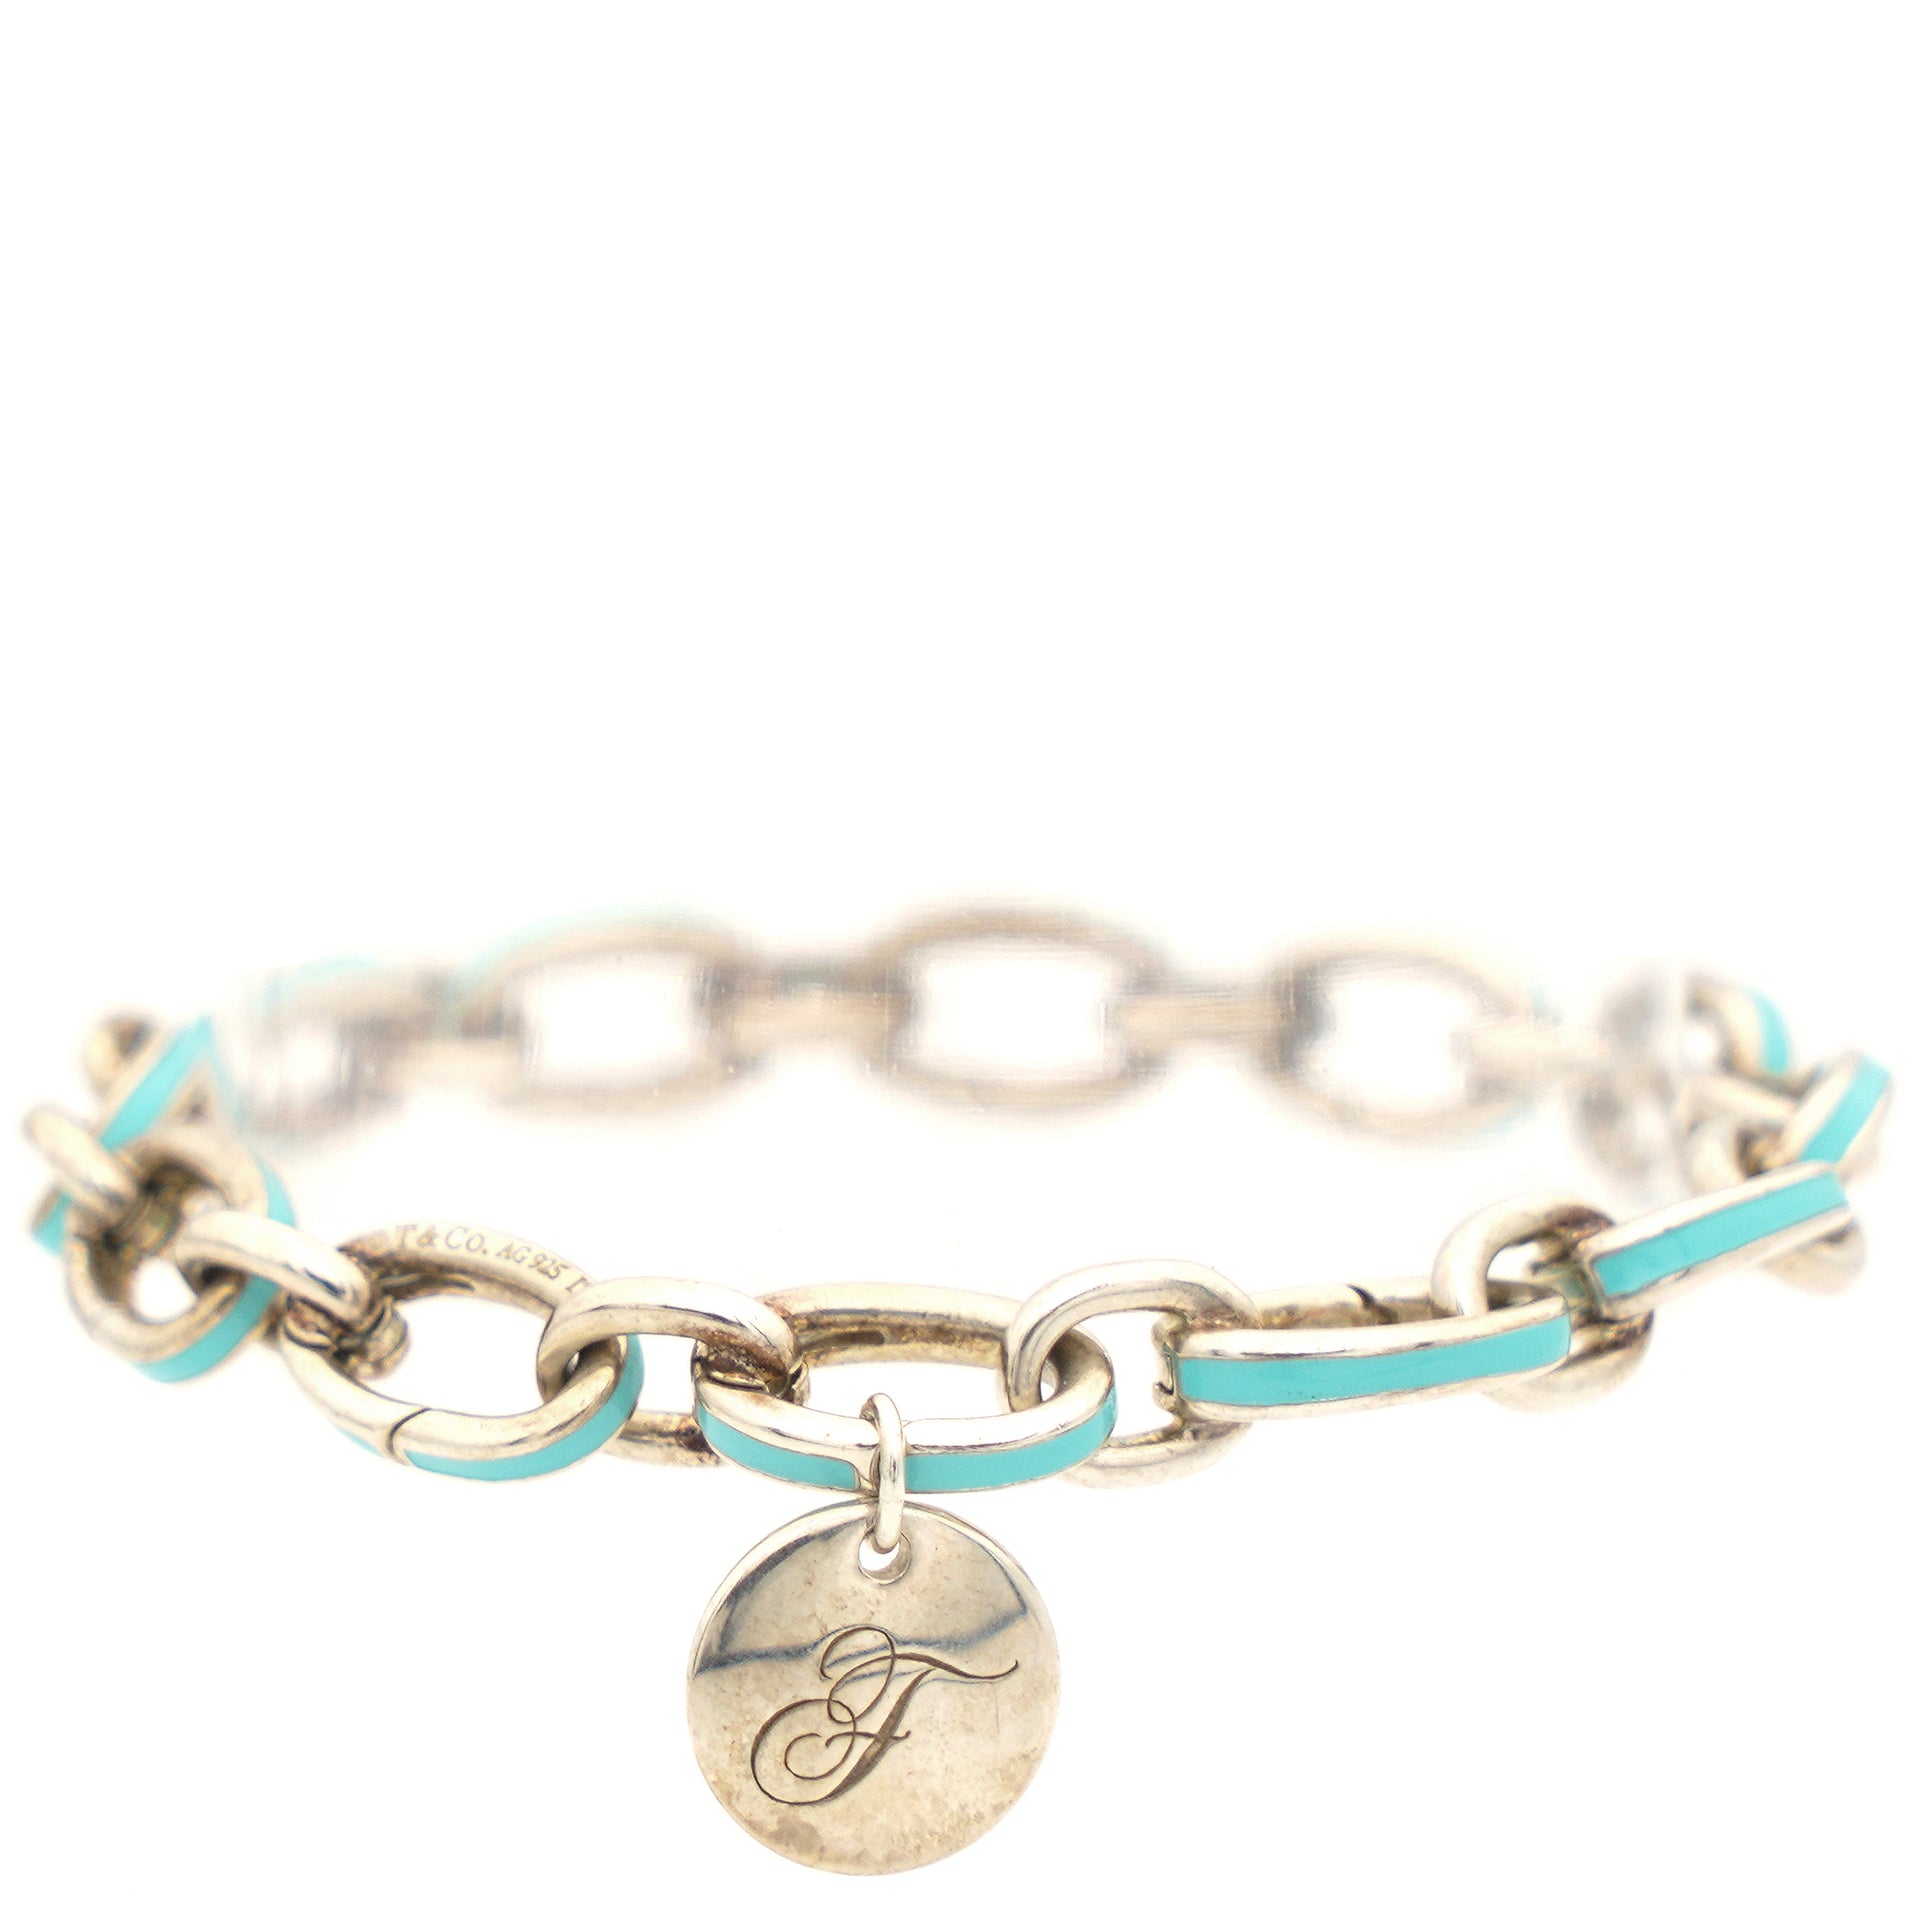 Tiffany style bracelet with miniprint charm